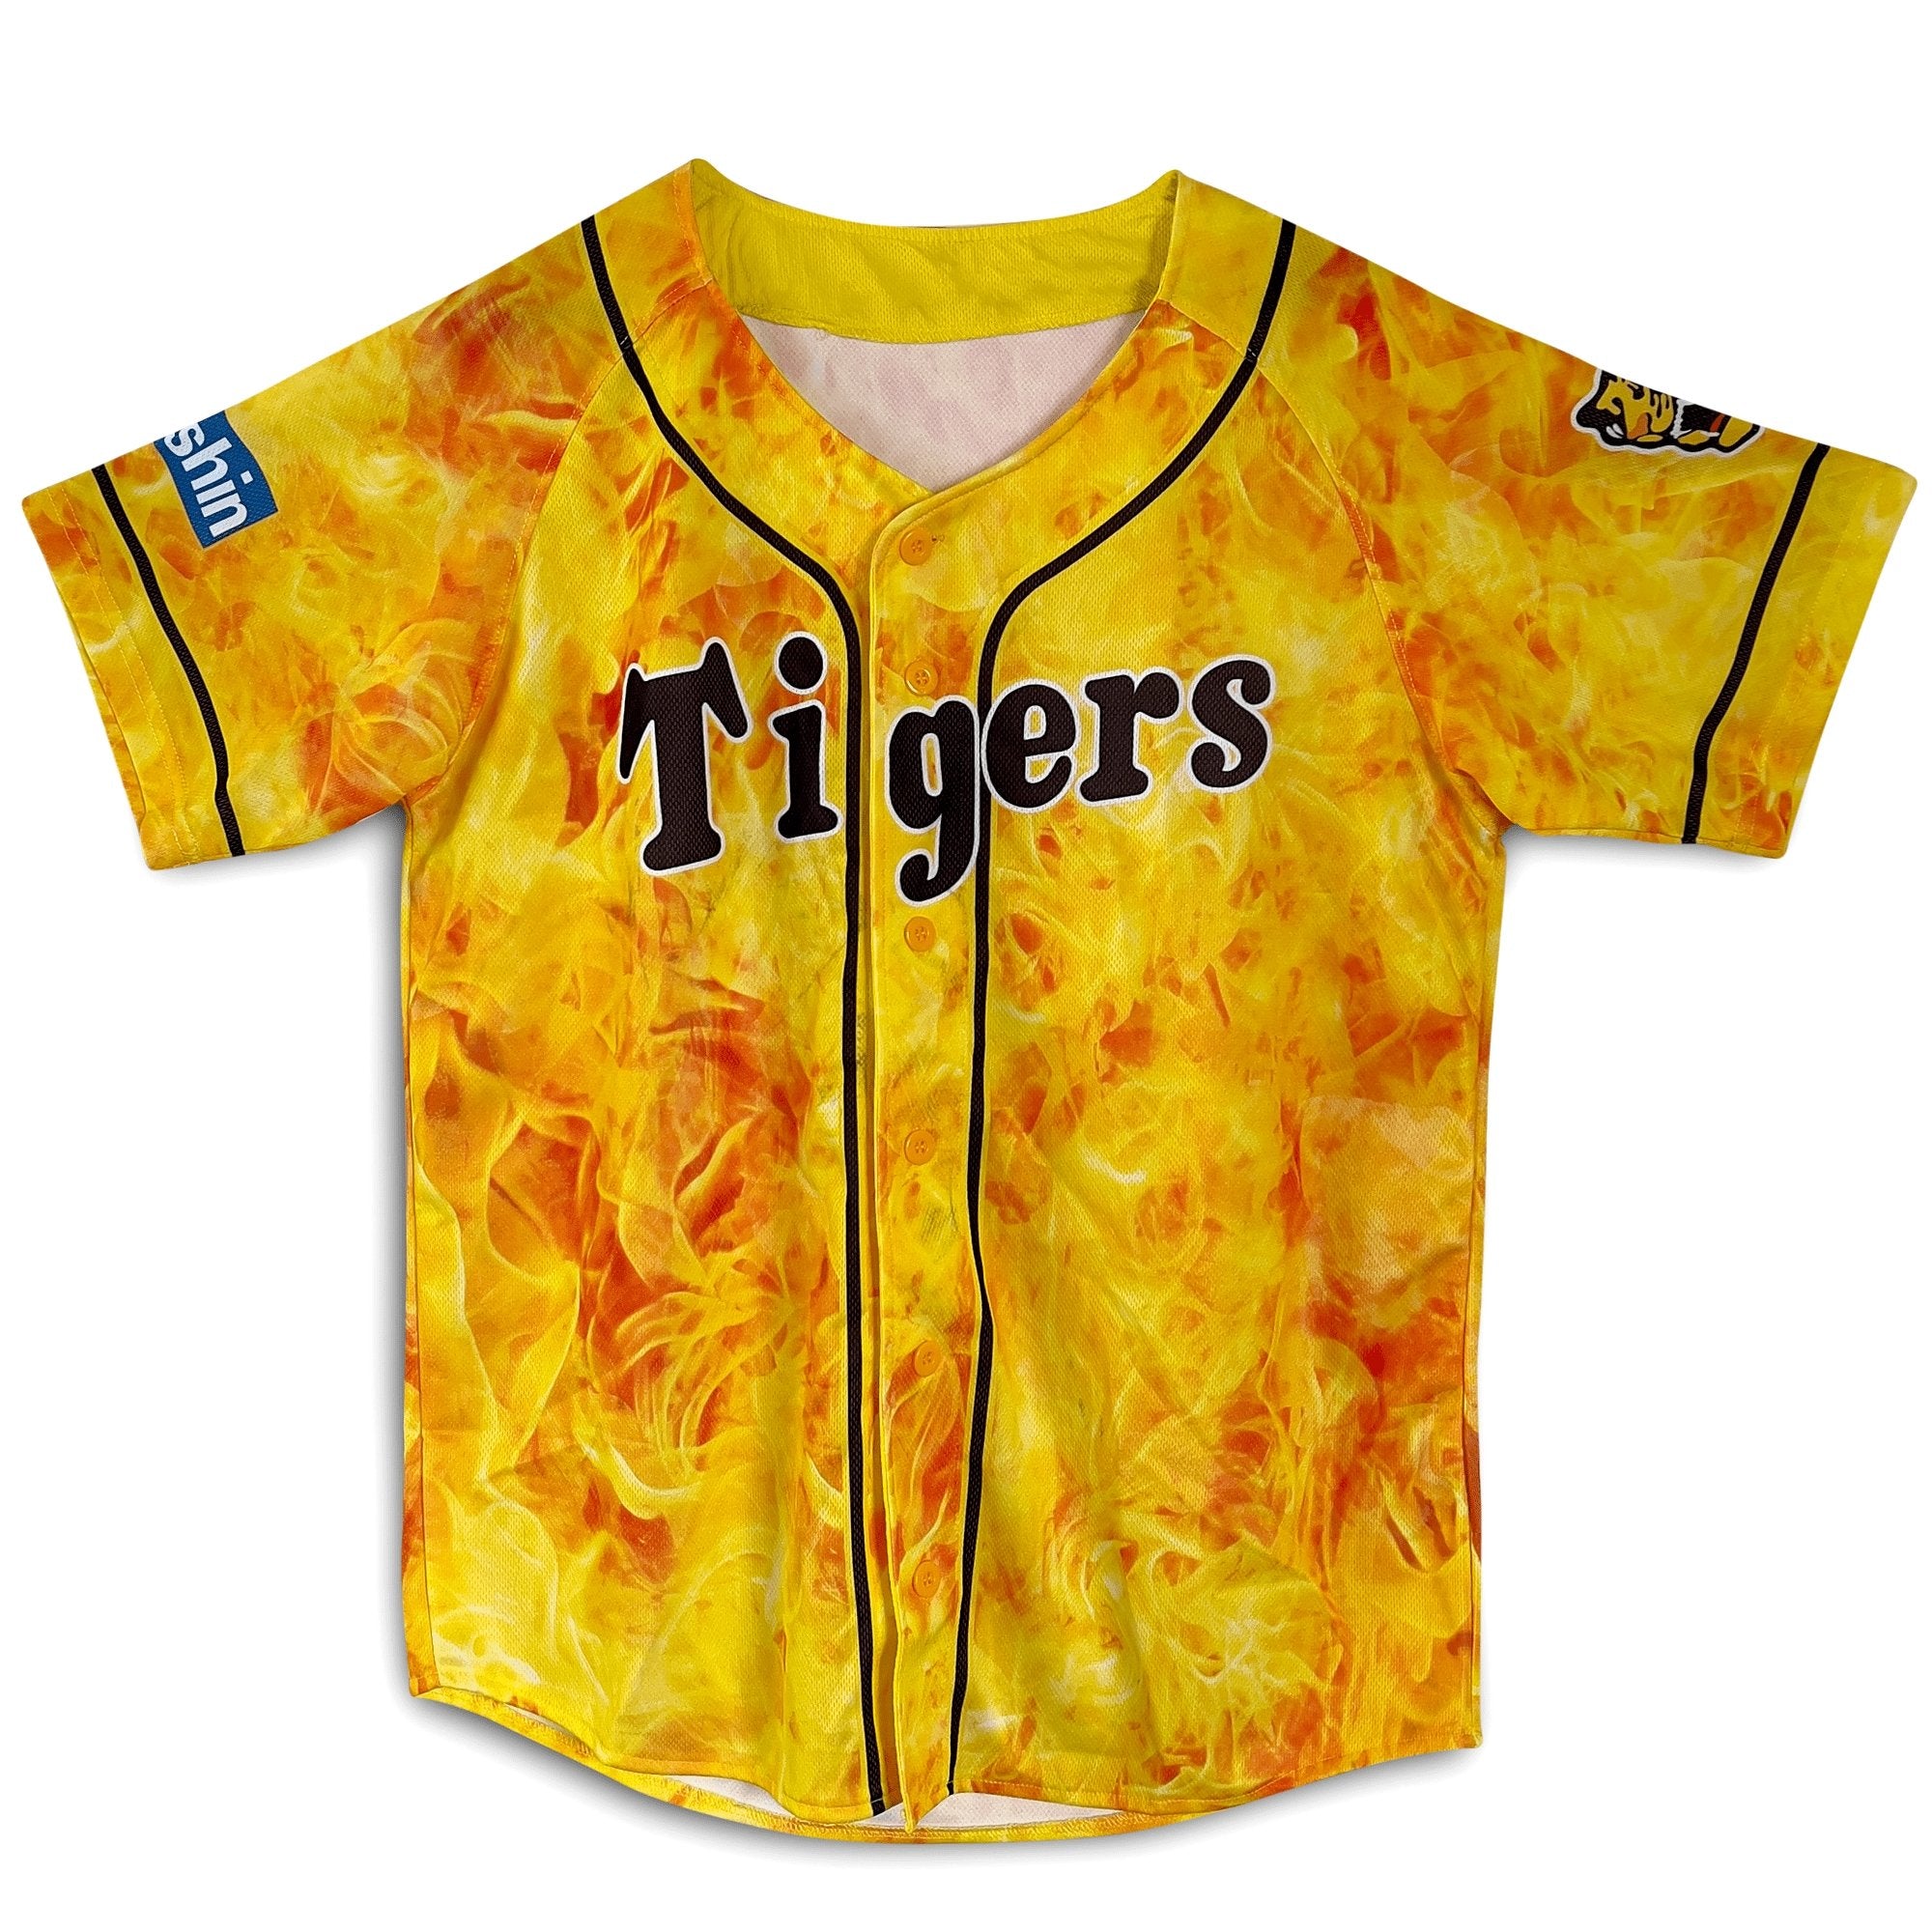 Tigers baseball retro jersey